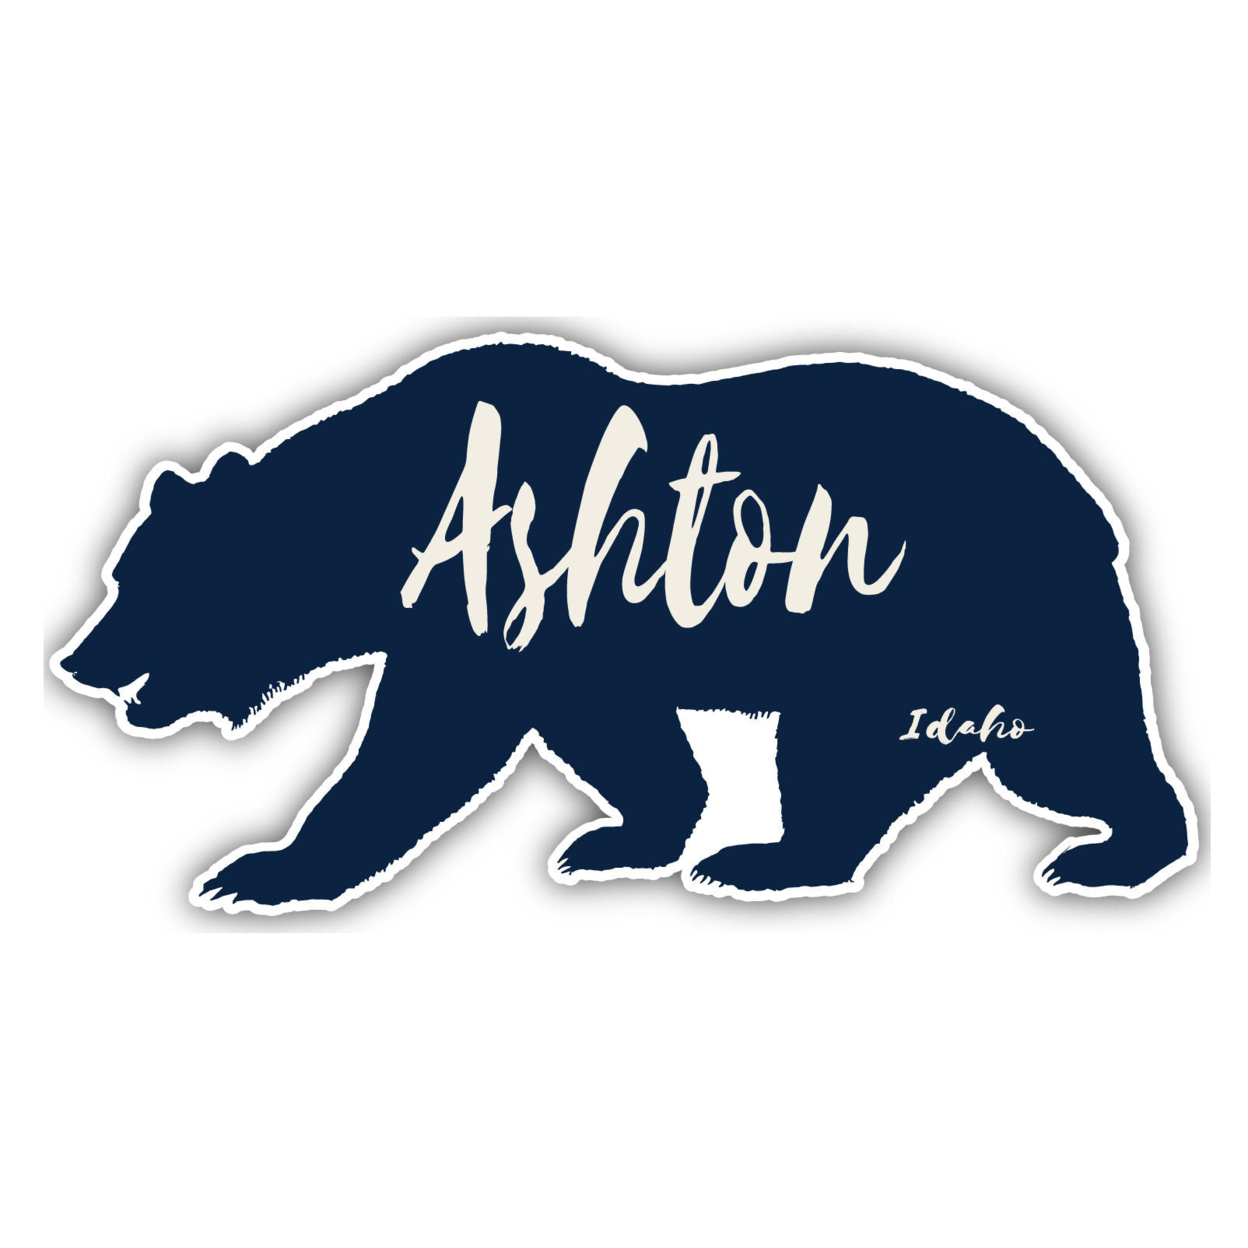 Ashton Idaho Souvenir Decorative Stickers (Choose Theme And Size) - 4-Pack, 10-Inch, Tent